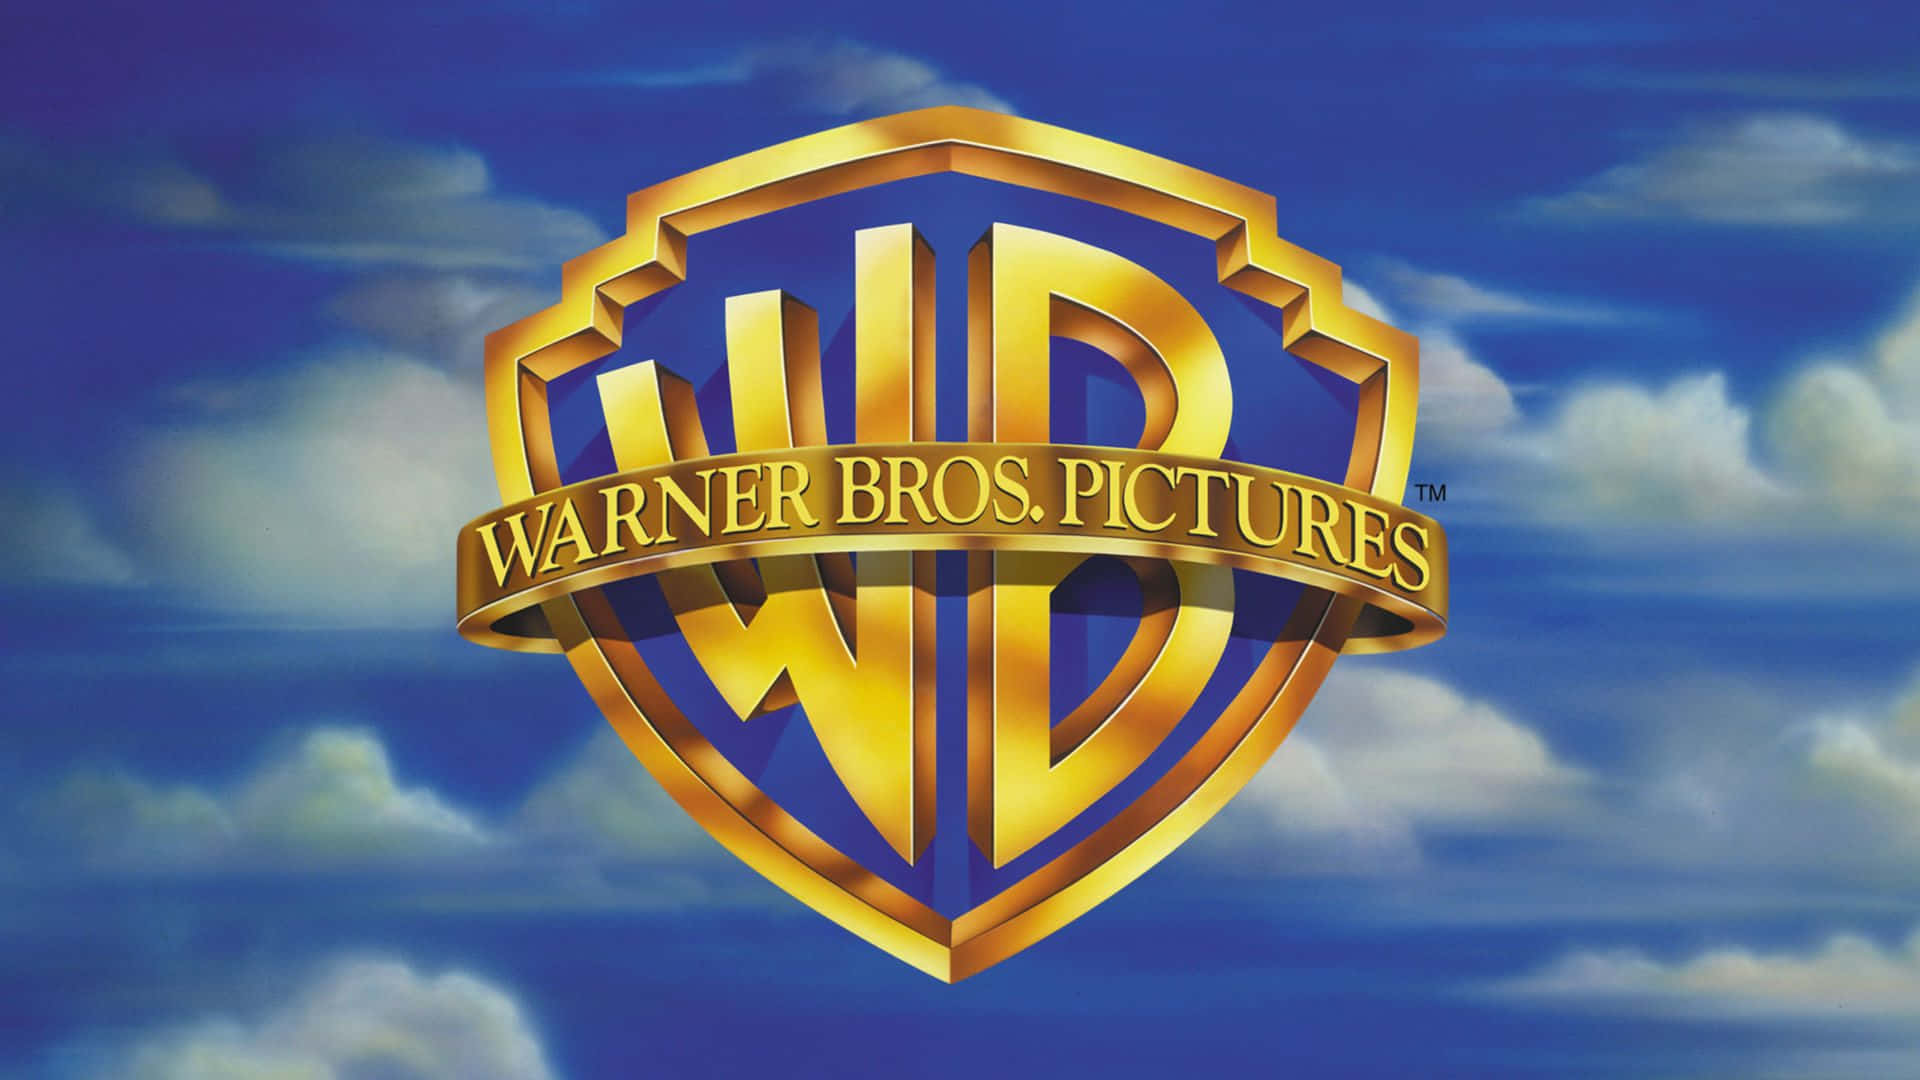 Old Warner Bros Picture